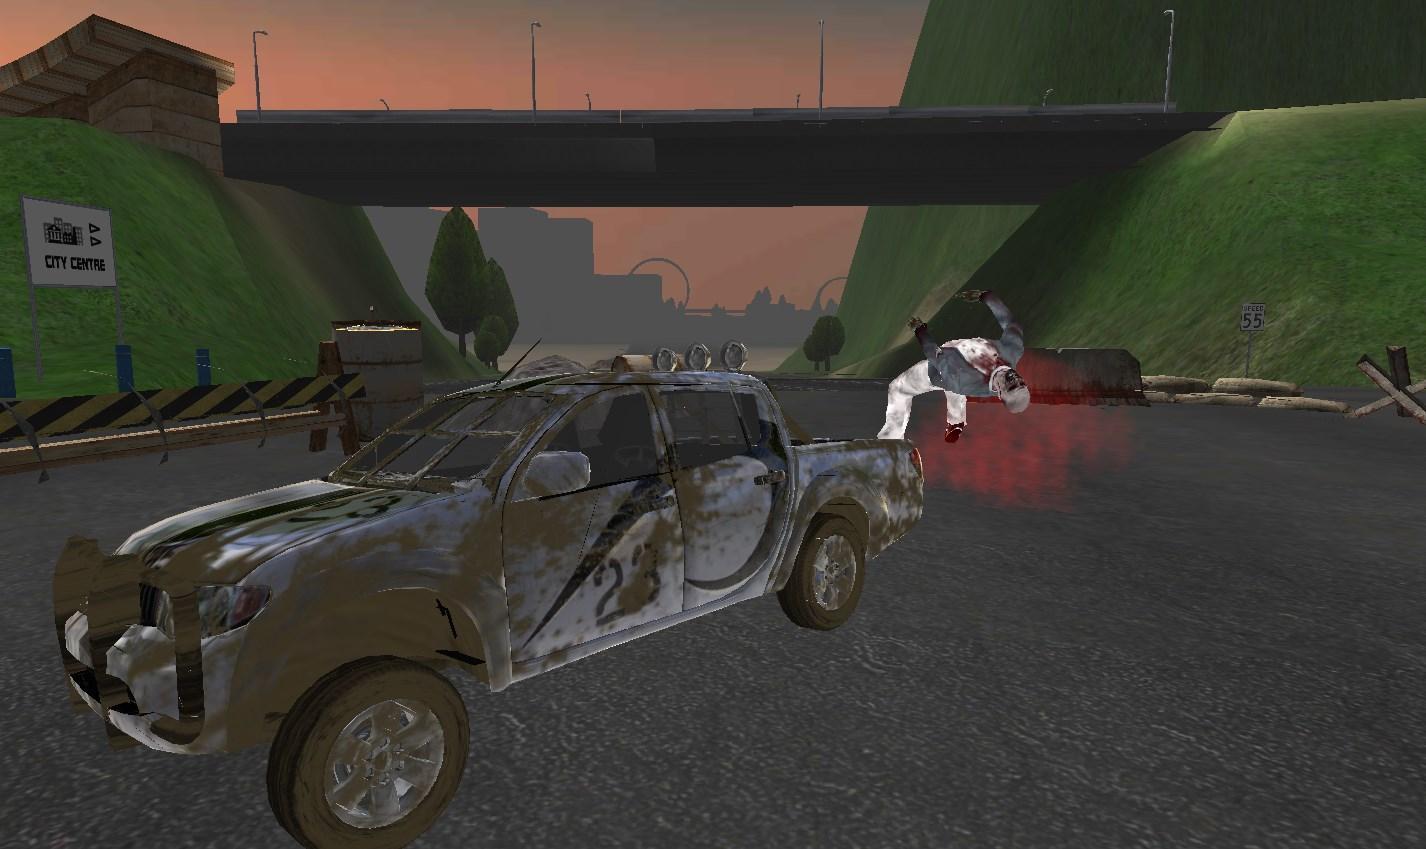 Screenshot 1 of រថយន្ត​ដឹក​ដី​បើក​បរ​ស្លាប់​តាម​ផ្លូវ Zombie 1.06